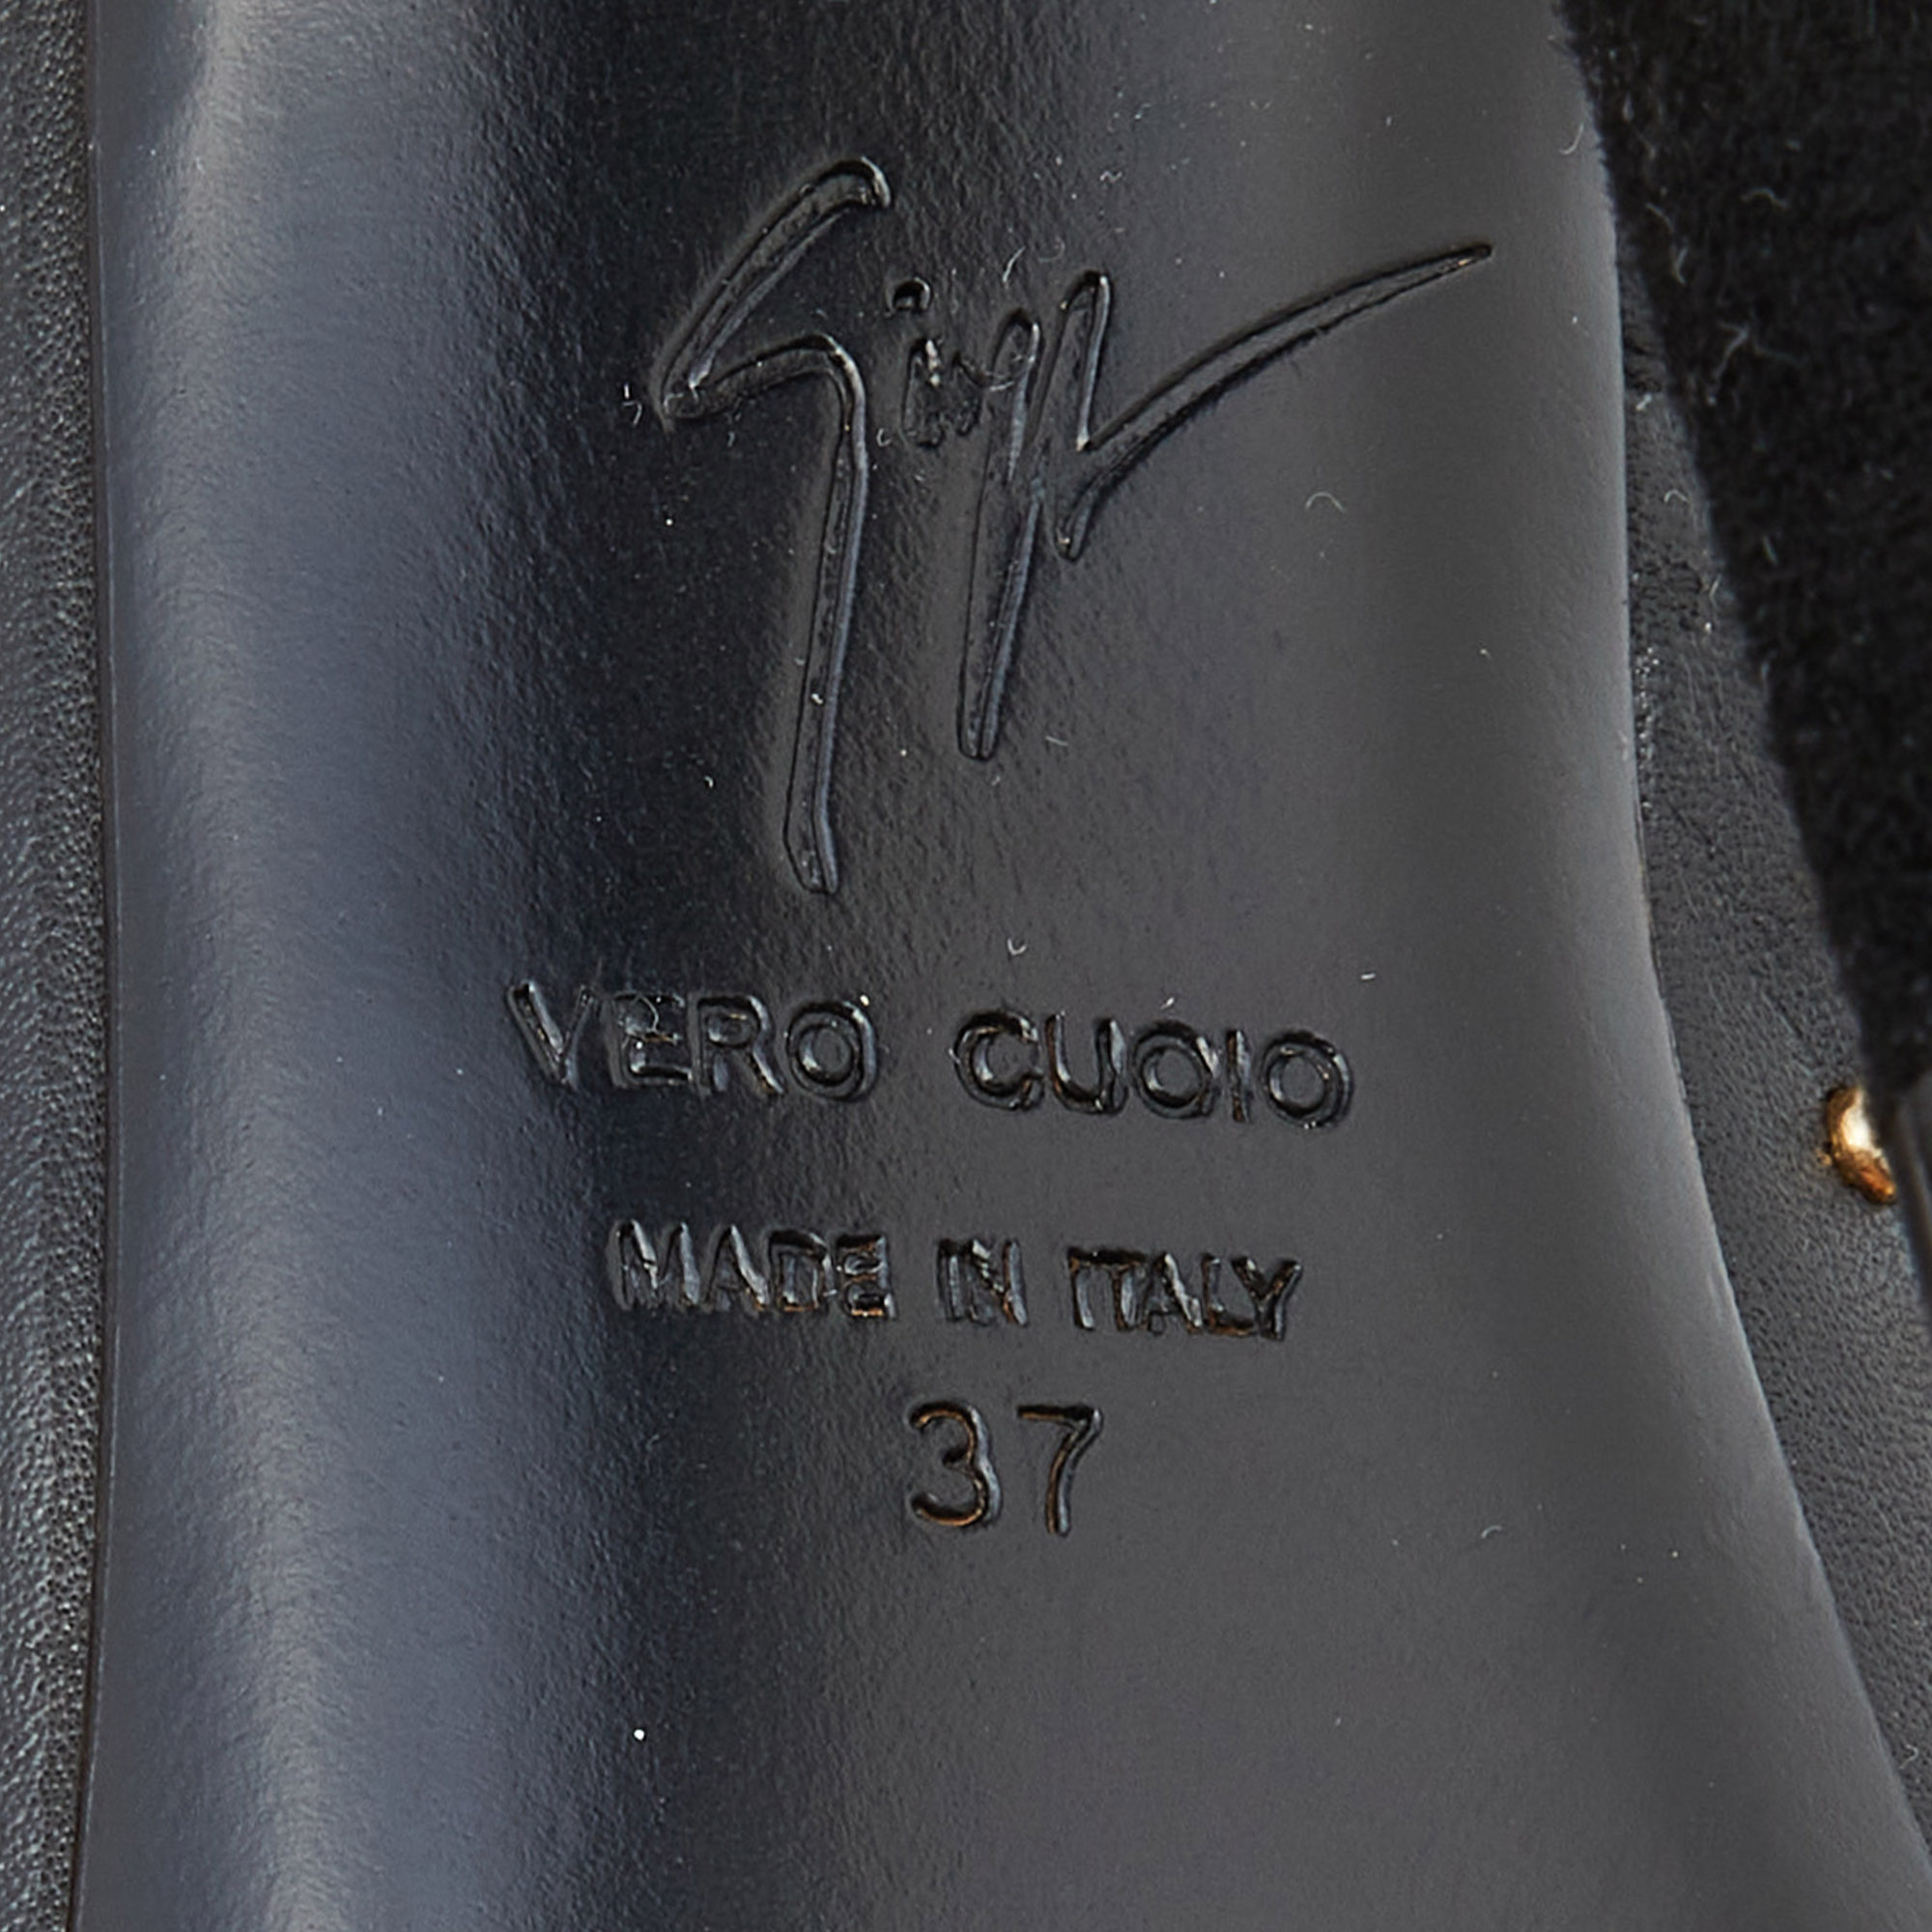 Giuseppe Zanotti Black Studded Leather Peep Toe Ankle Booties Size 37